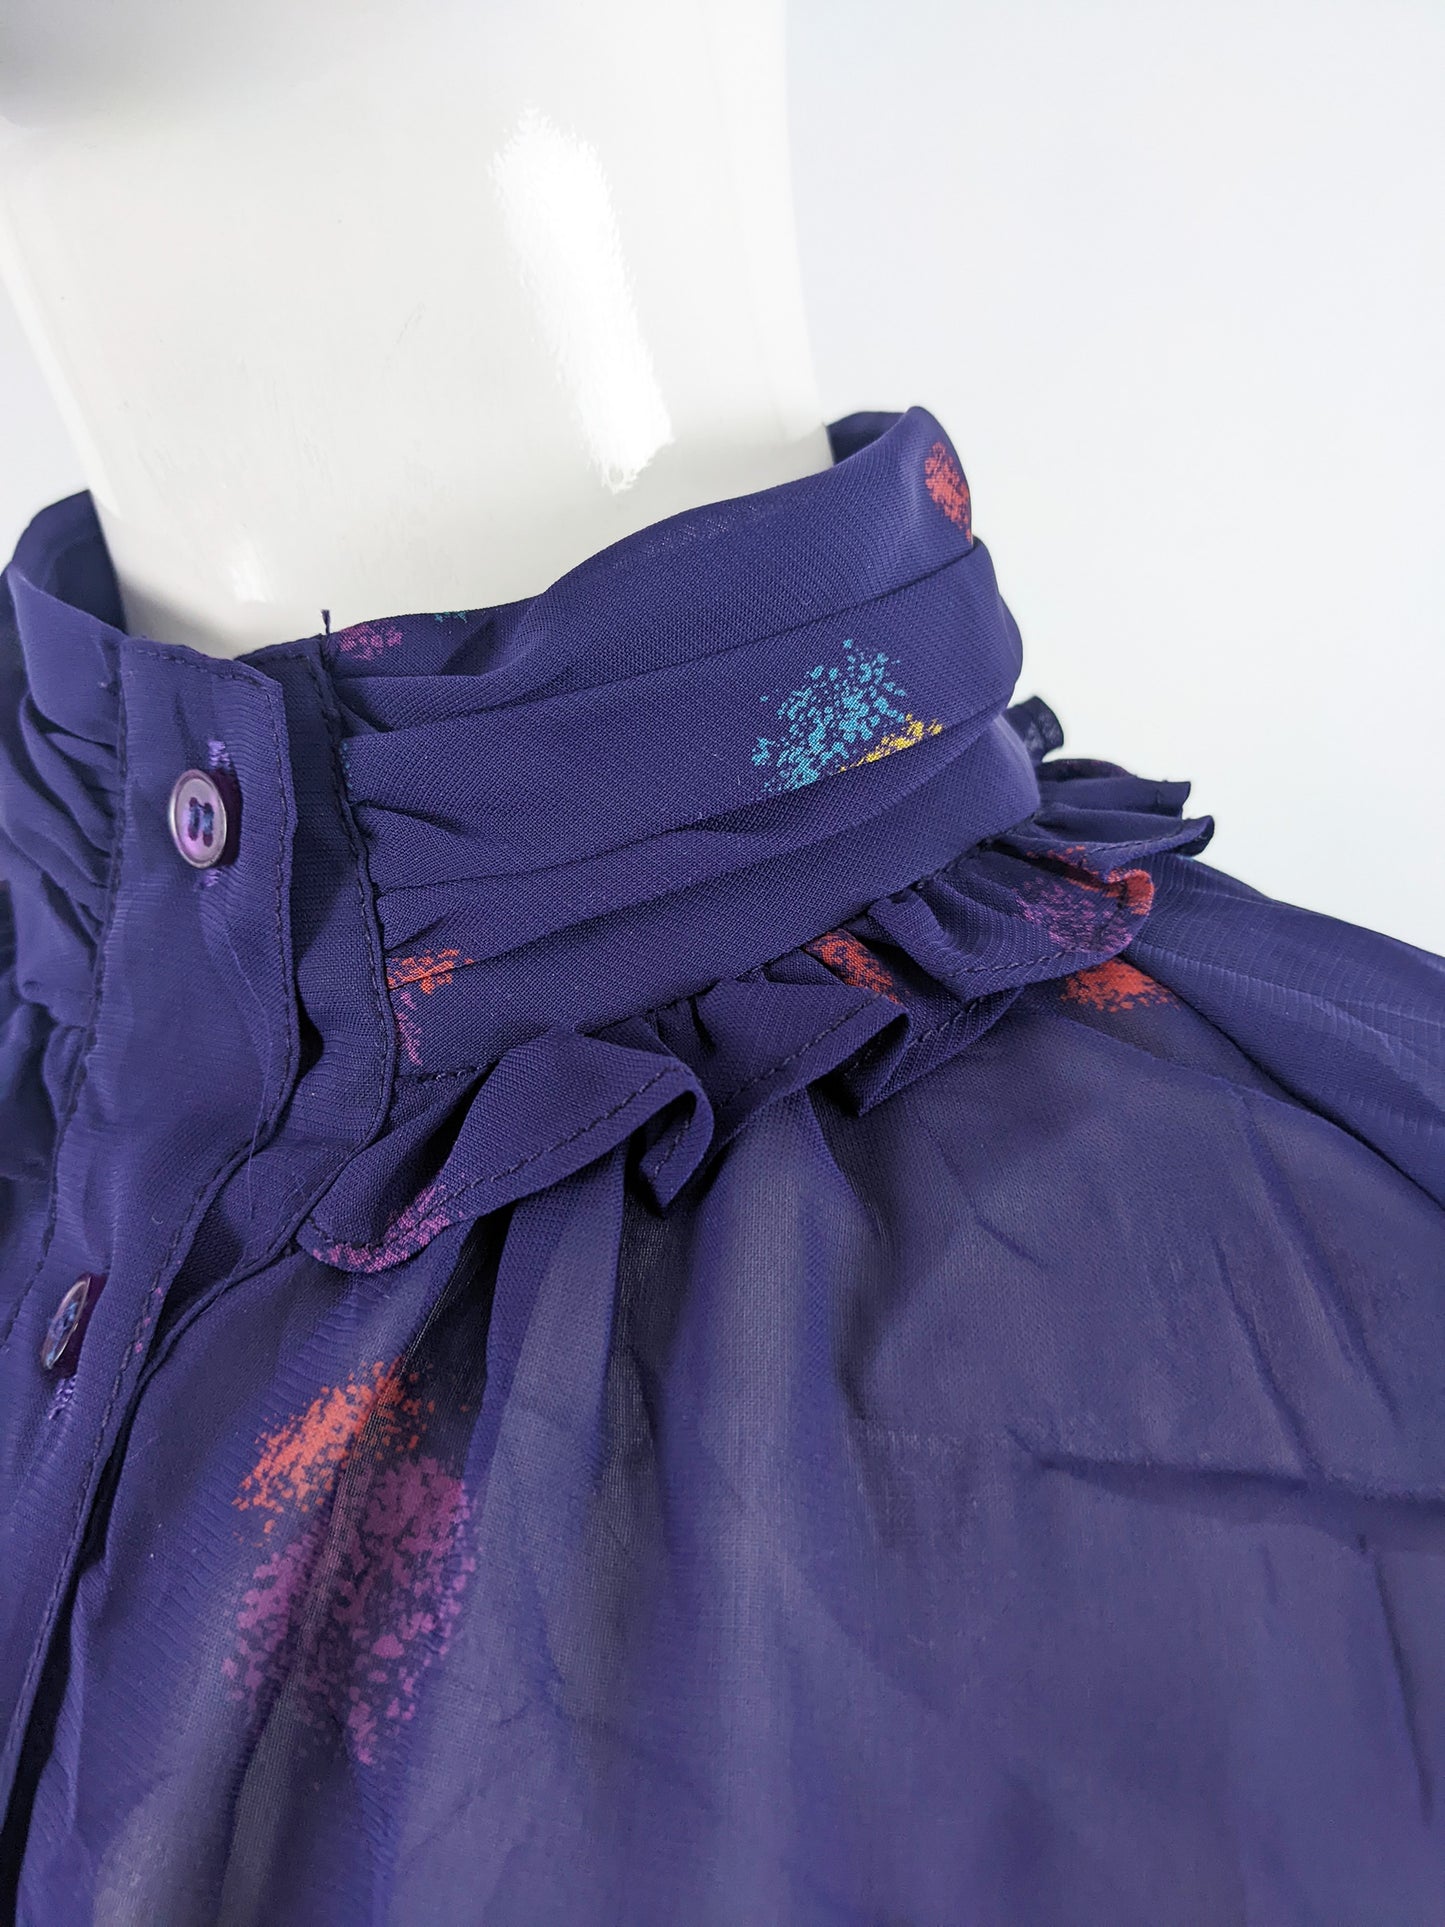 Aroche Paris Vintage Sheer Purple Dress, 1970s